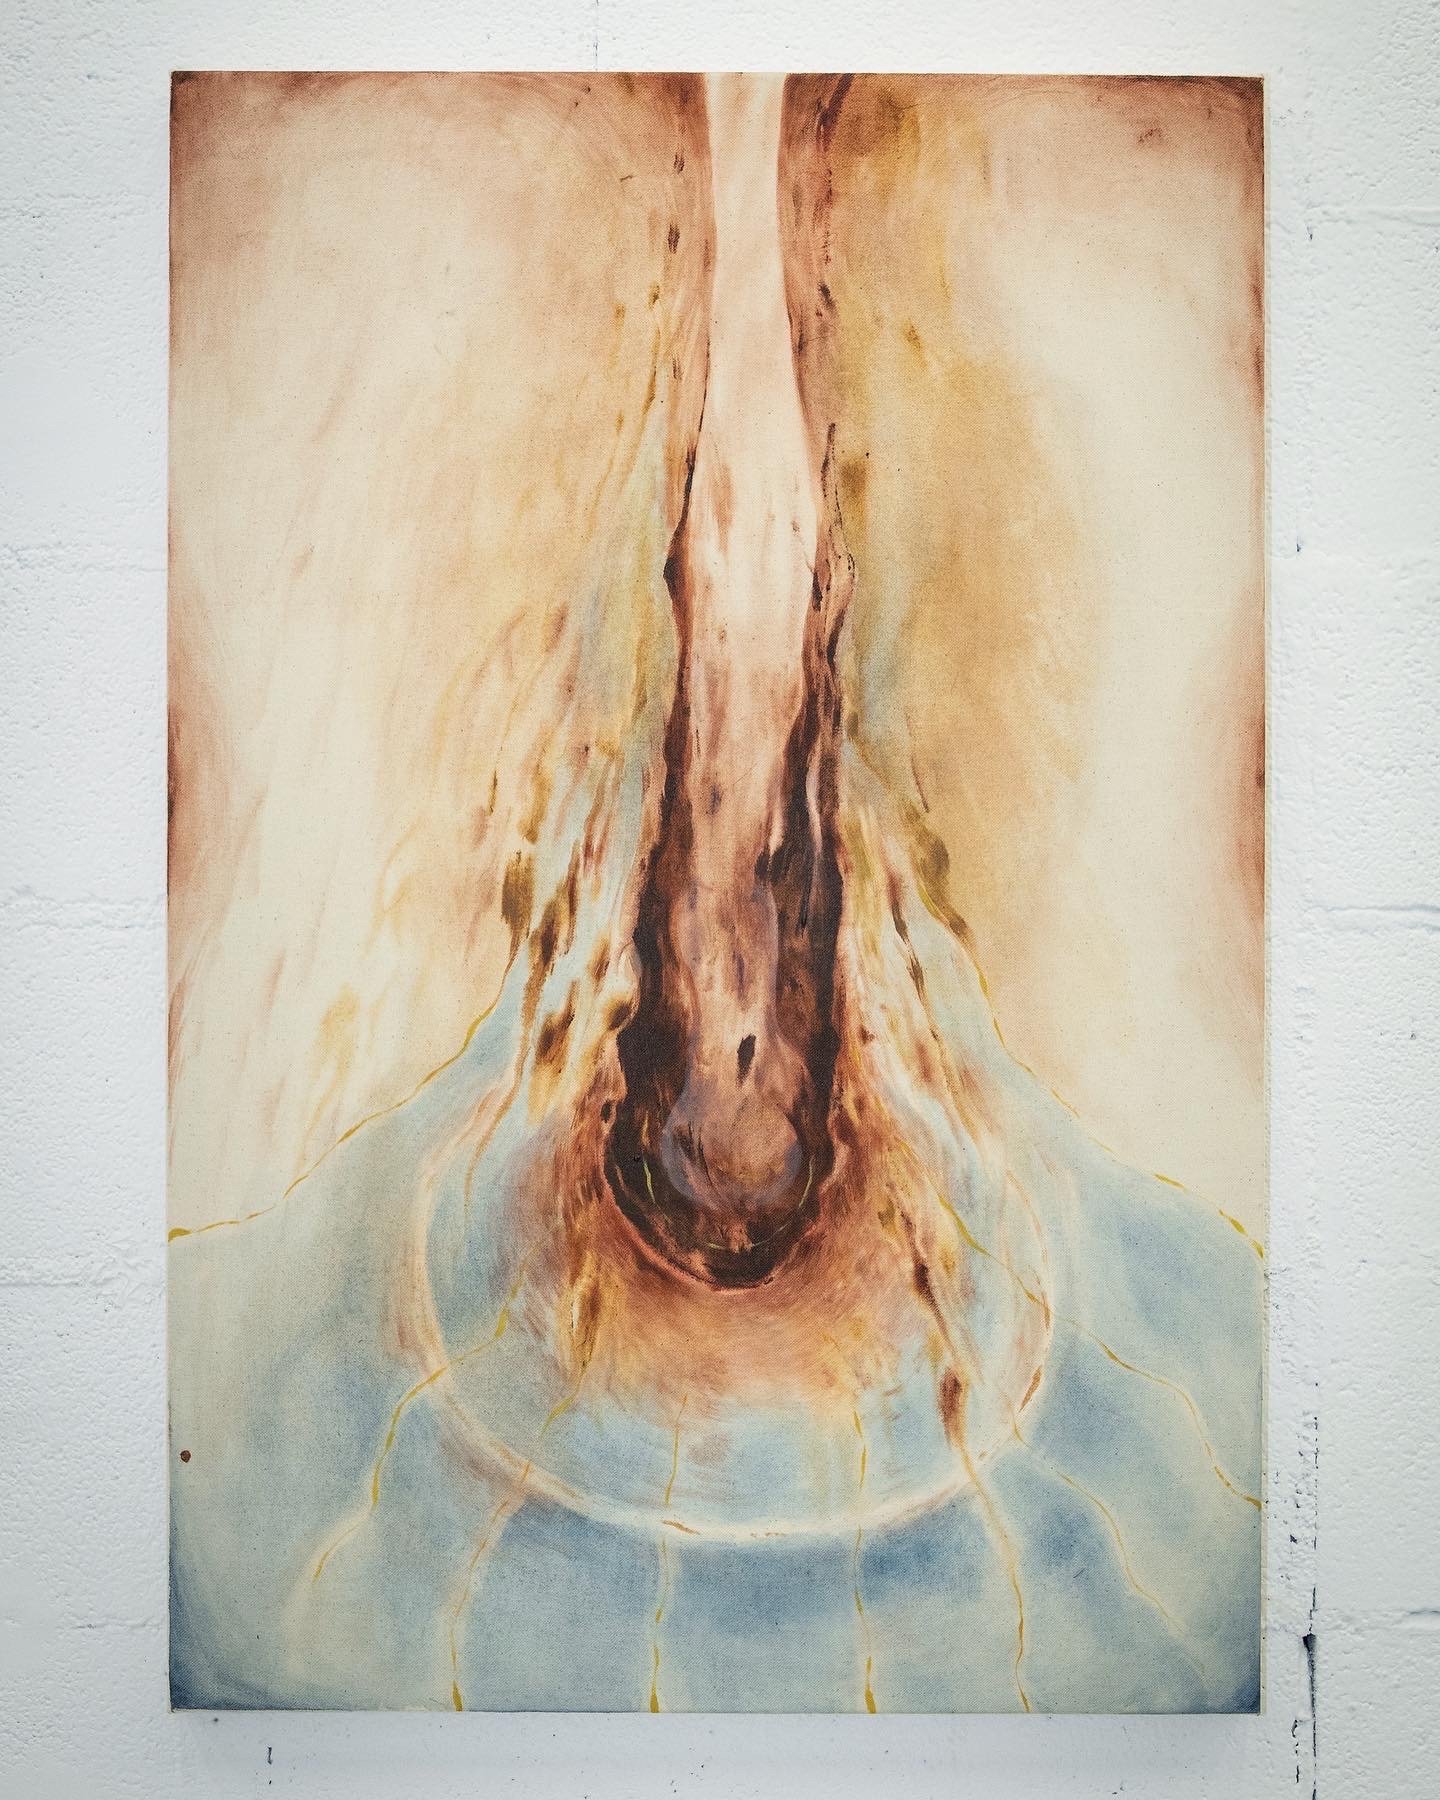   Corriente (Current) , 2022, Acrylic on canvas, 61cm x 91.5cm 